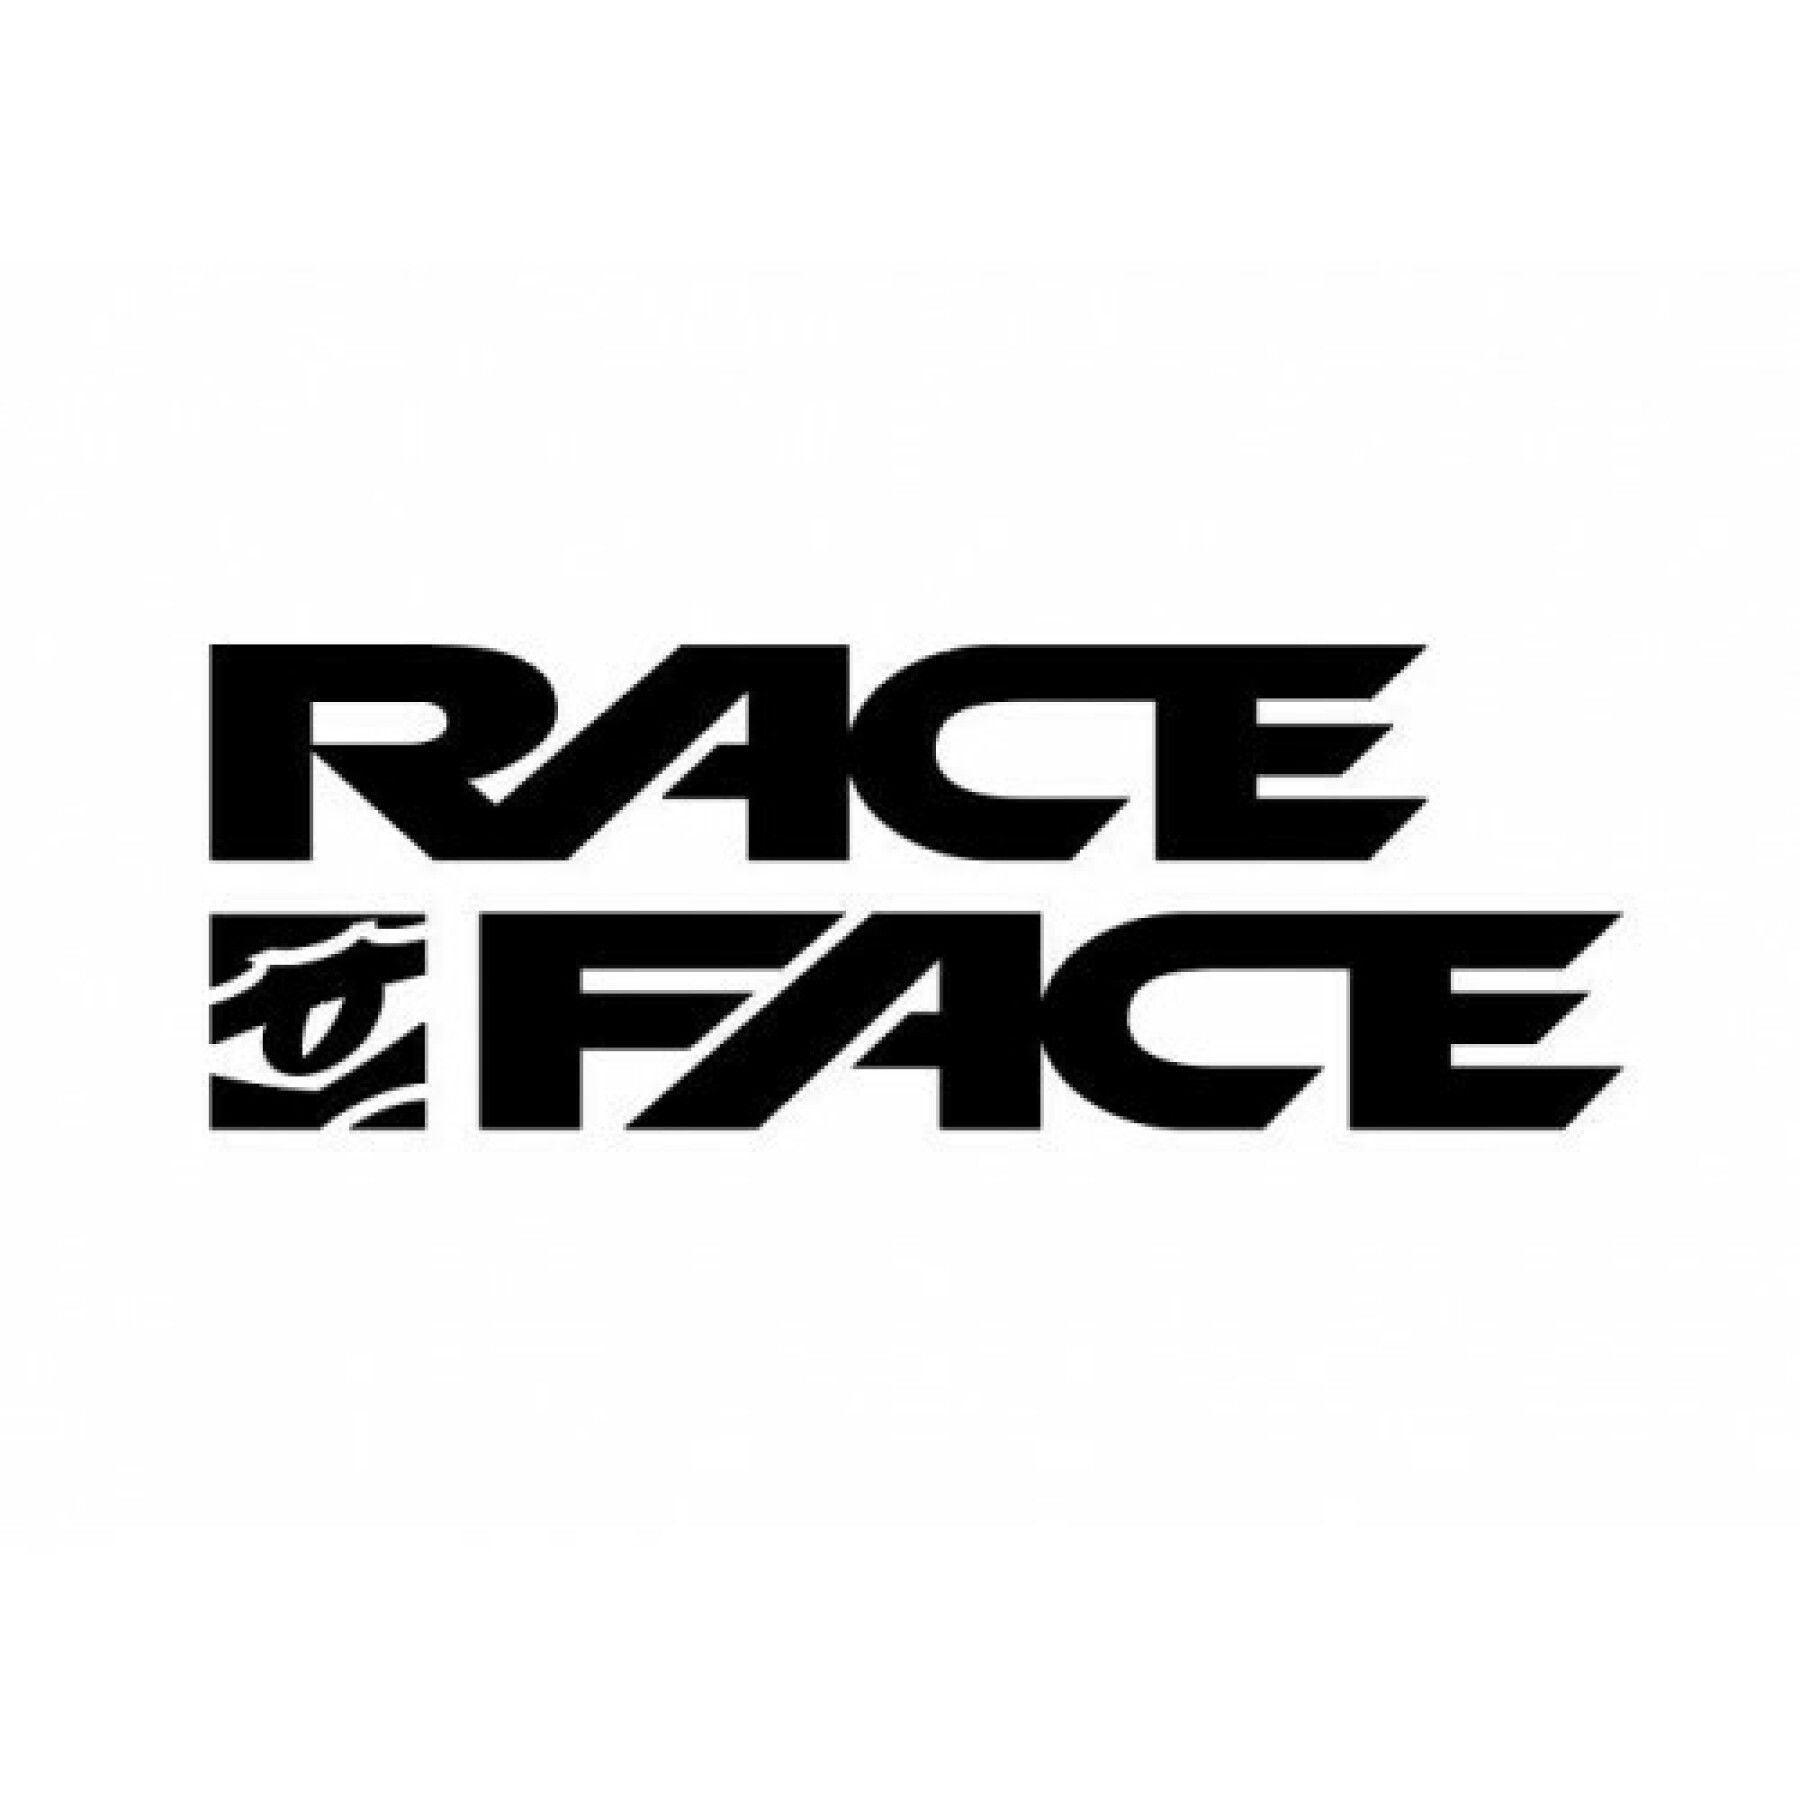 Llanta Race Face arc offset - 25 - 27.5 - 32t